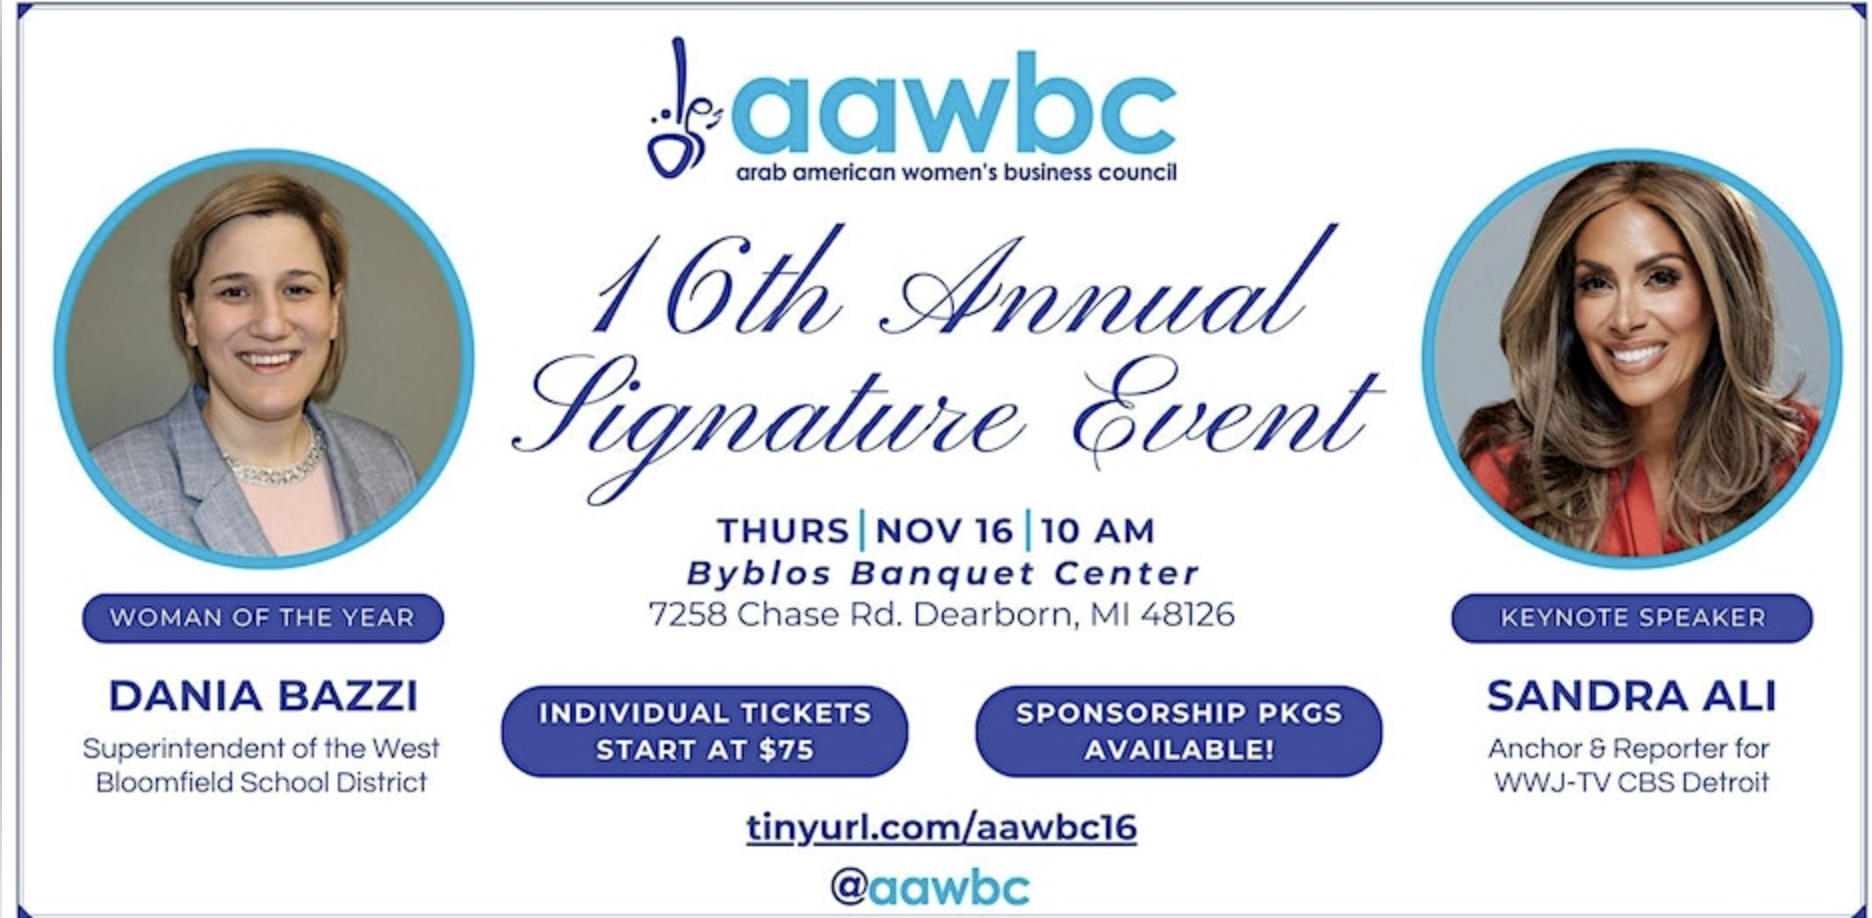 aawbc's 16th Annual Signature Event